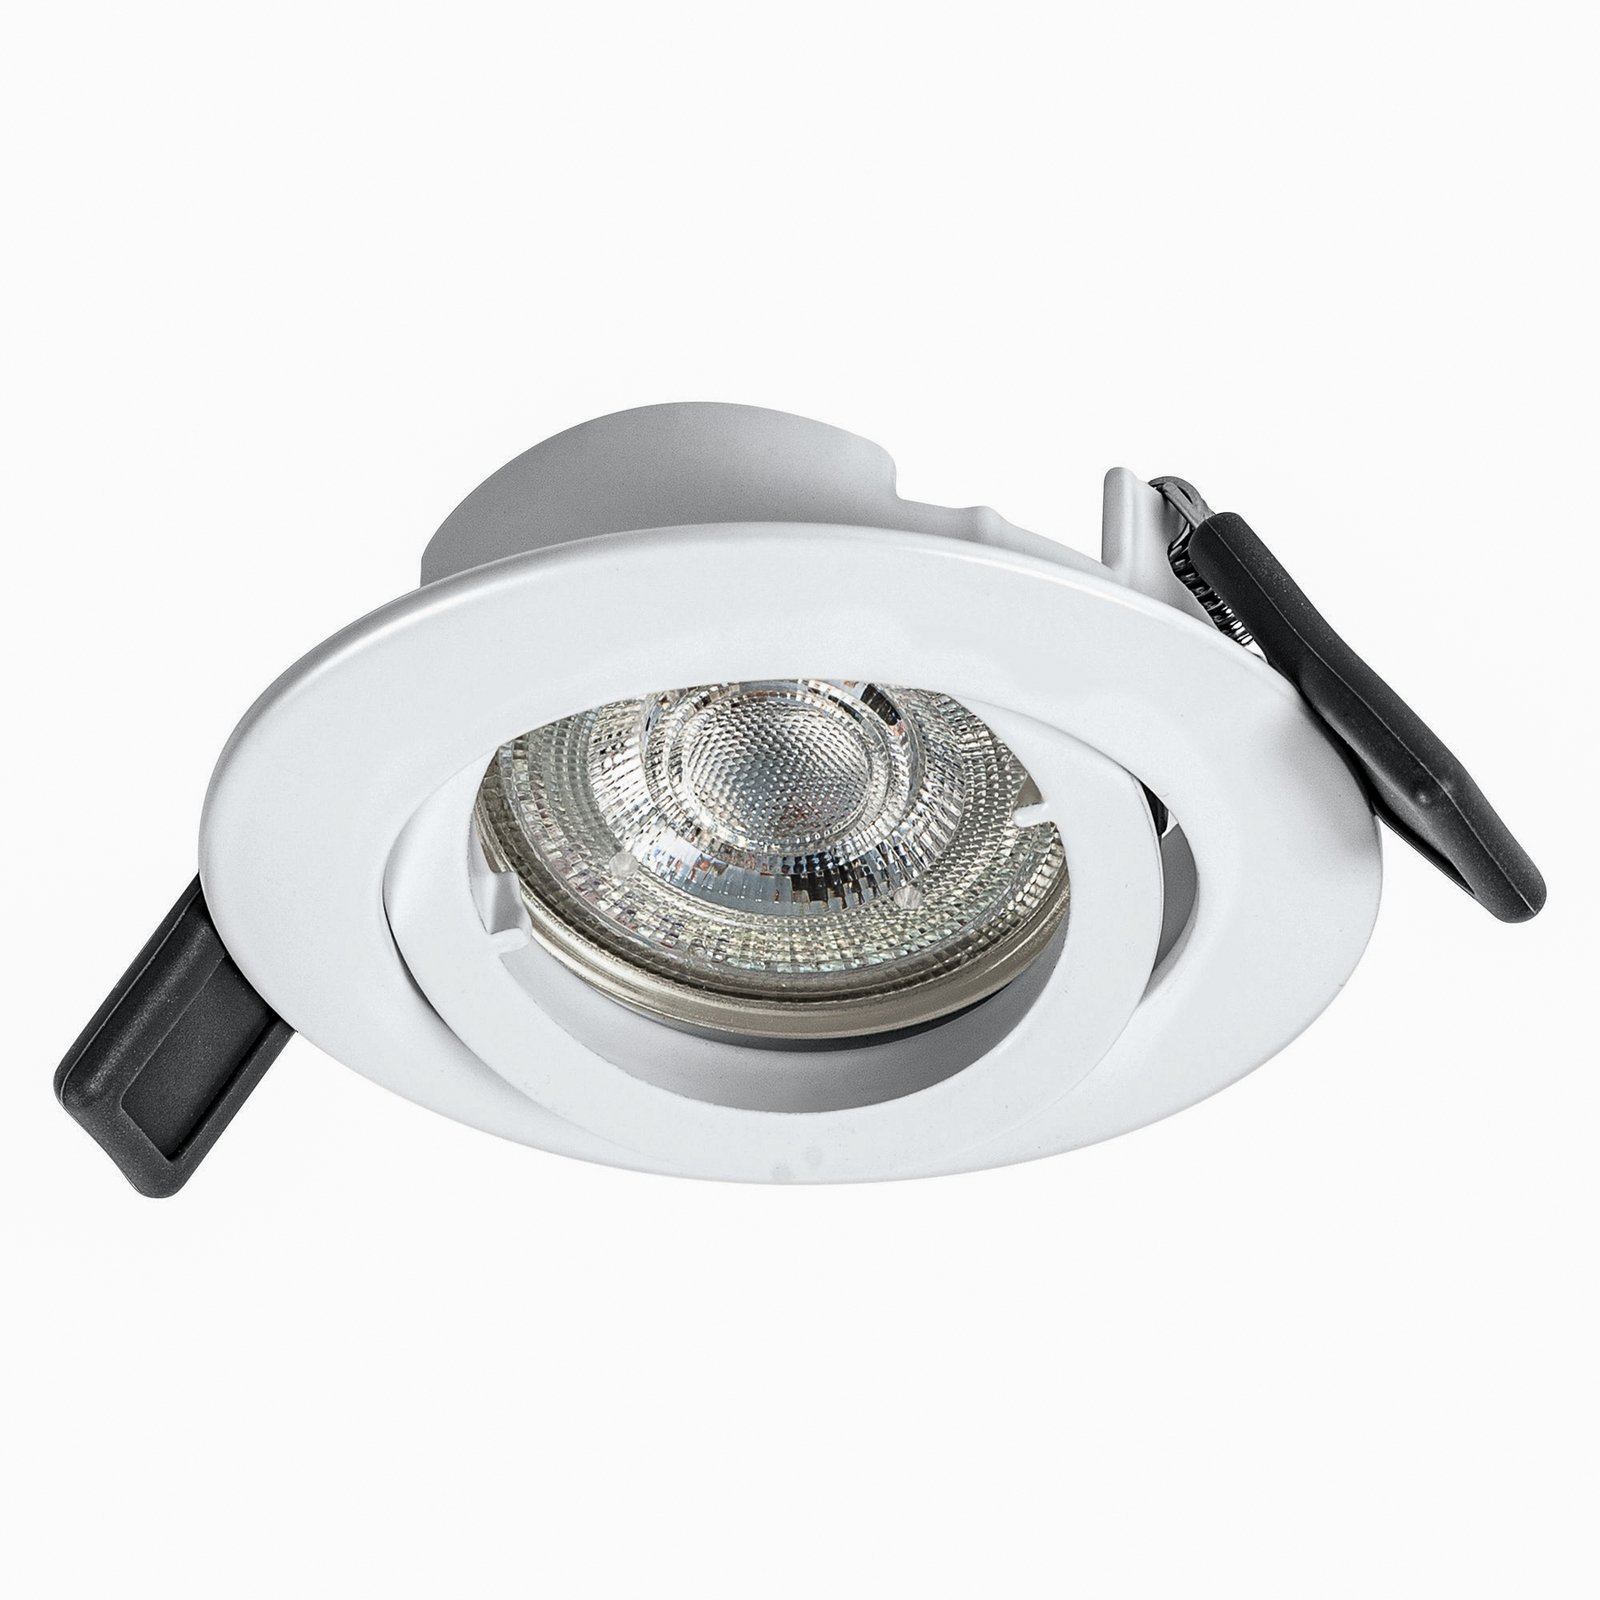 LEDVANCE Recess Twistlock lampe IP20 hvid